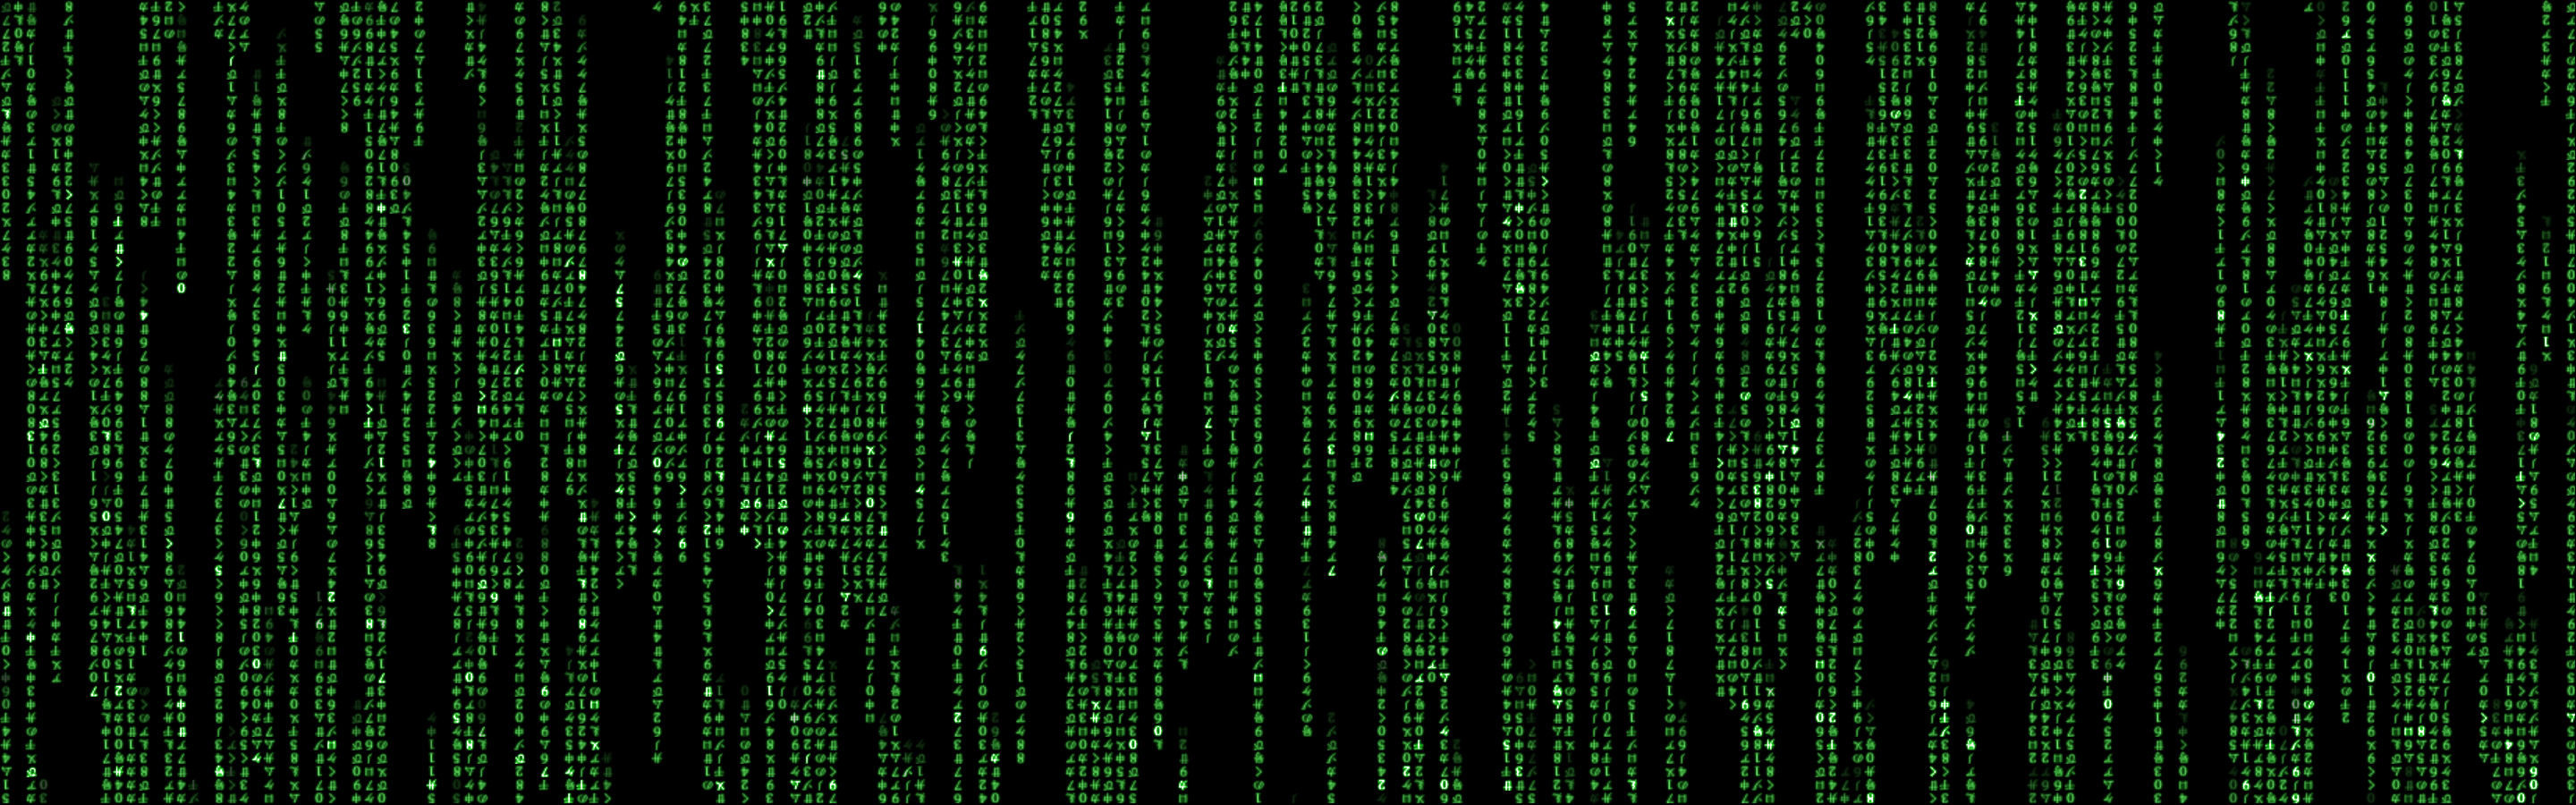 Binary Code Matrix Movies matrix wallpaper